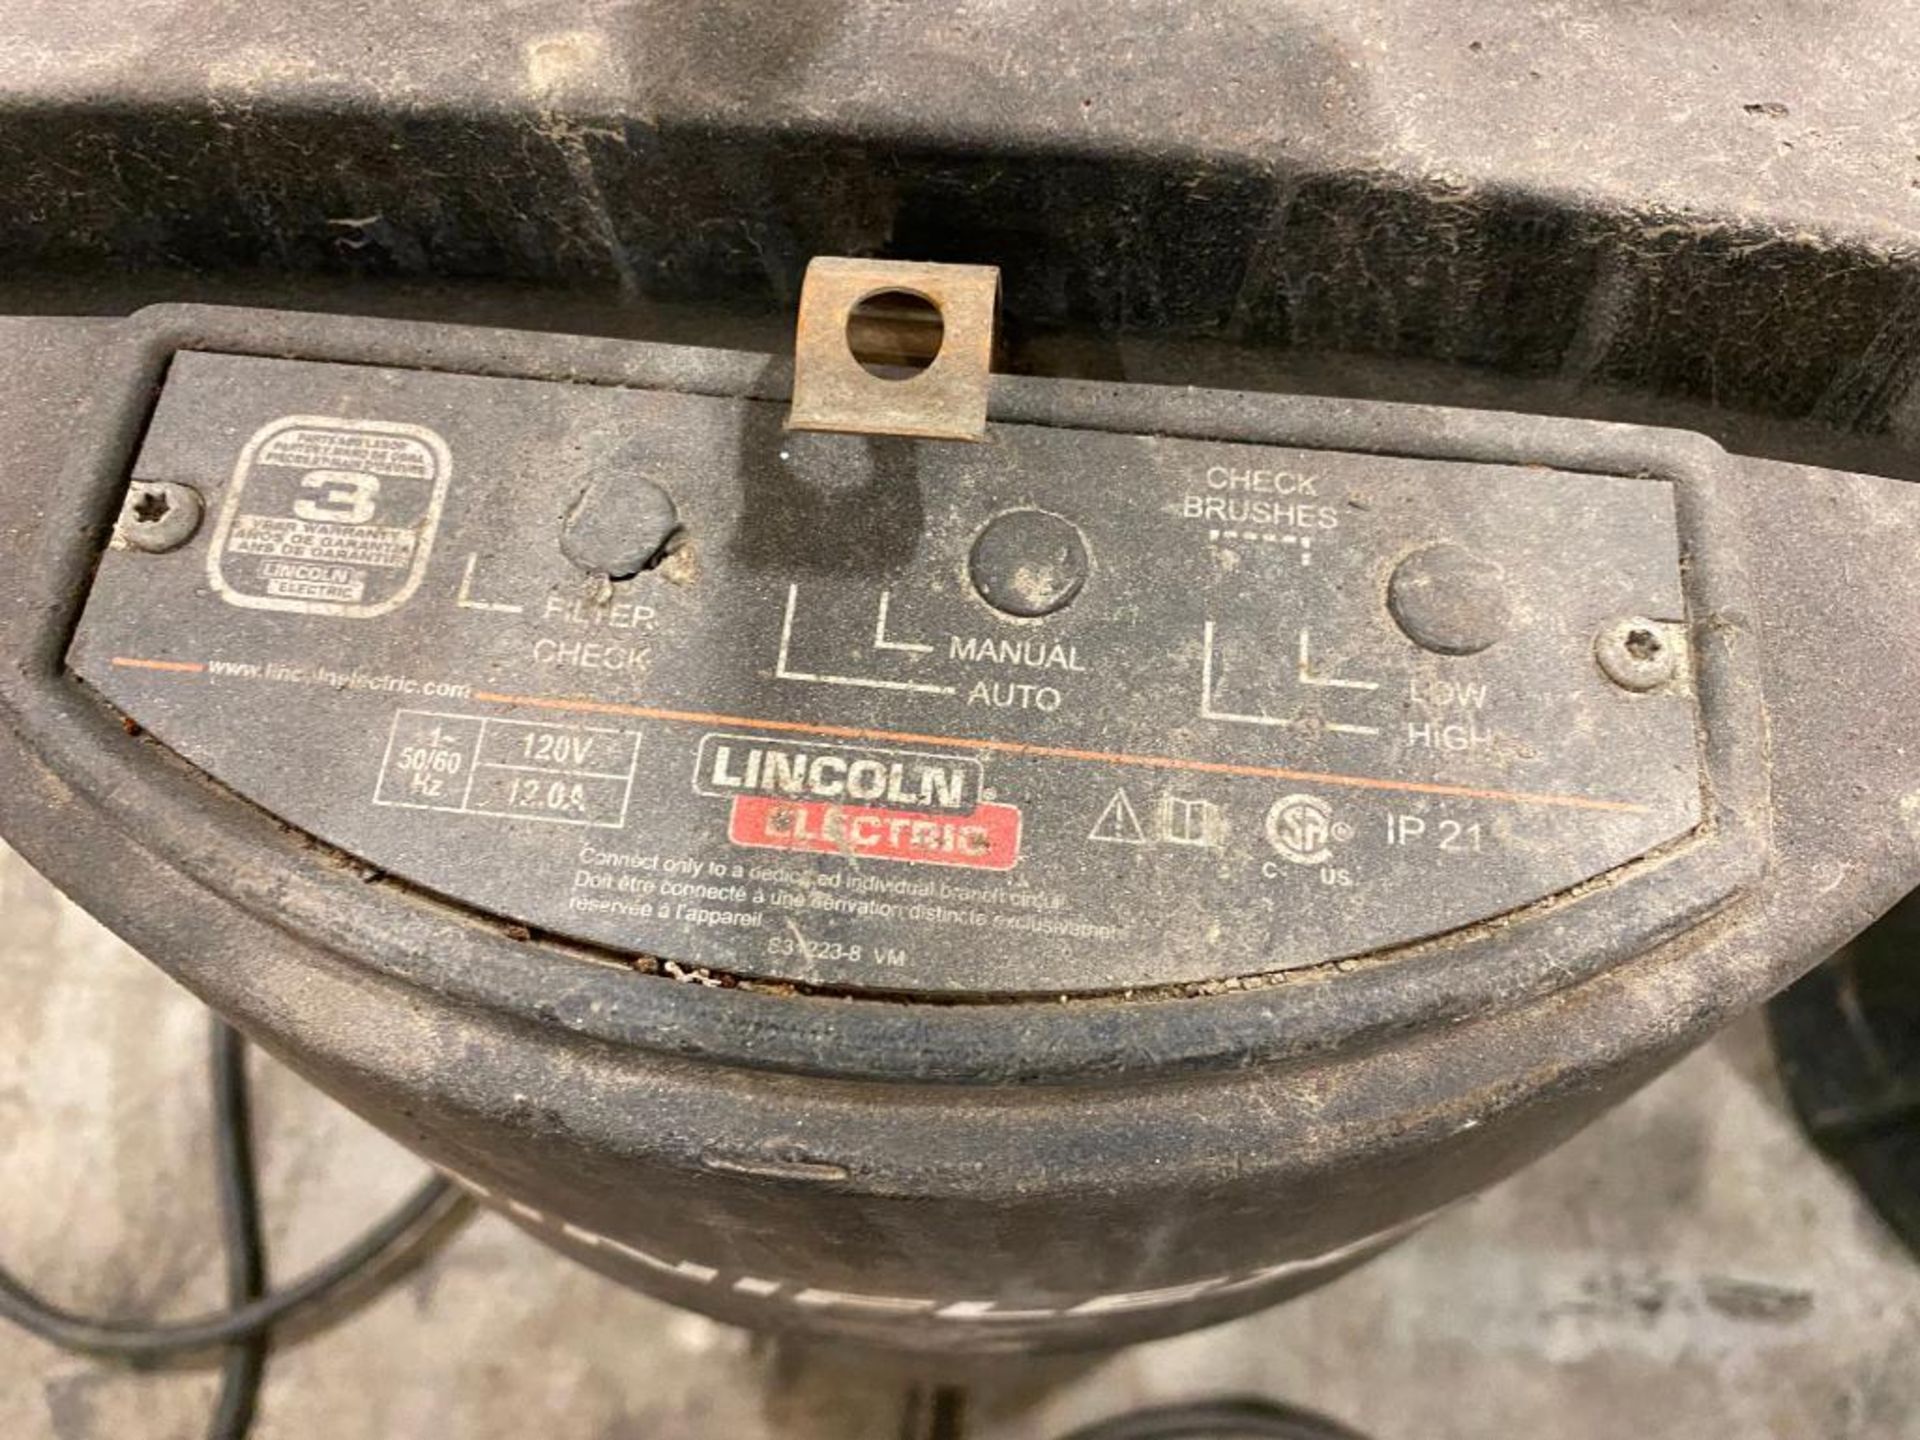 Lincoln Miniflex Portable Welding Fume Extractor, 120V, S/N U6170800028 - Image 3 of 3